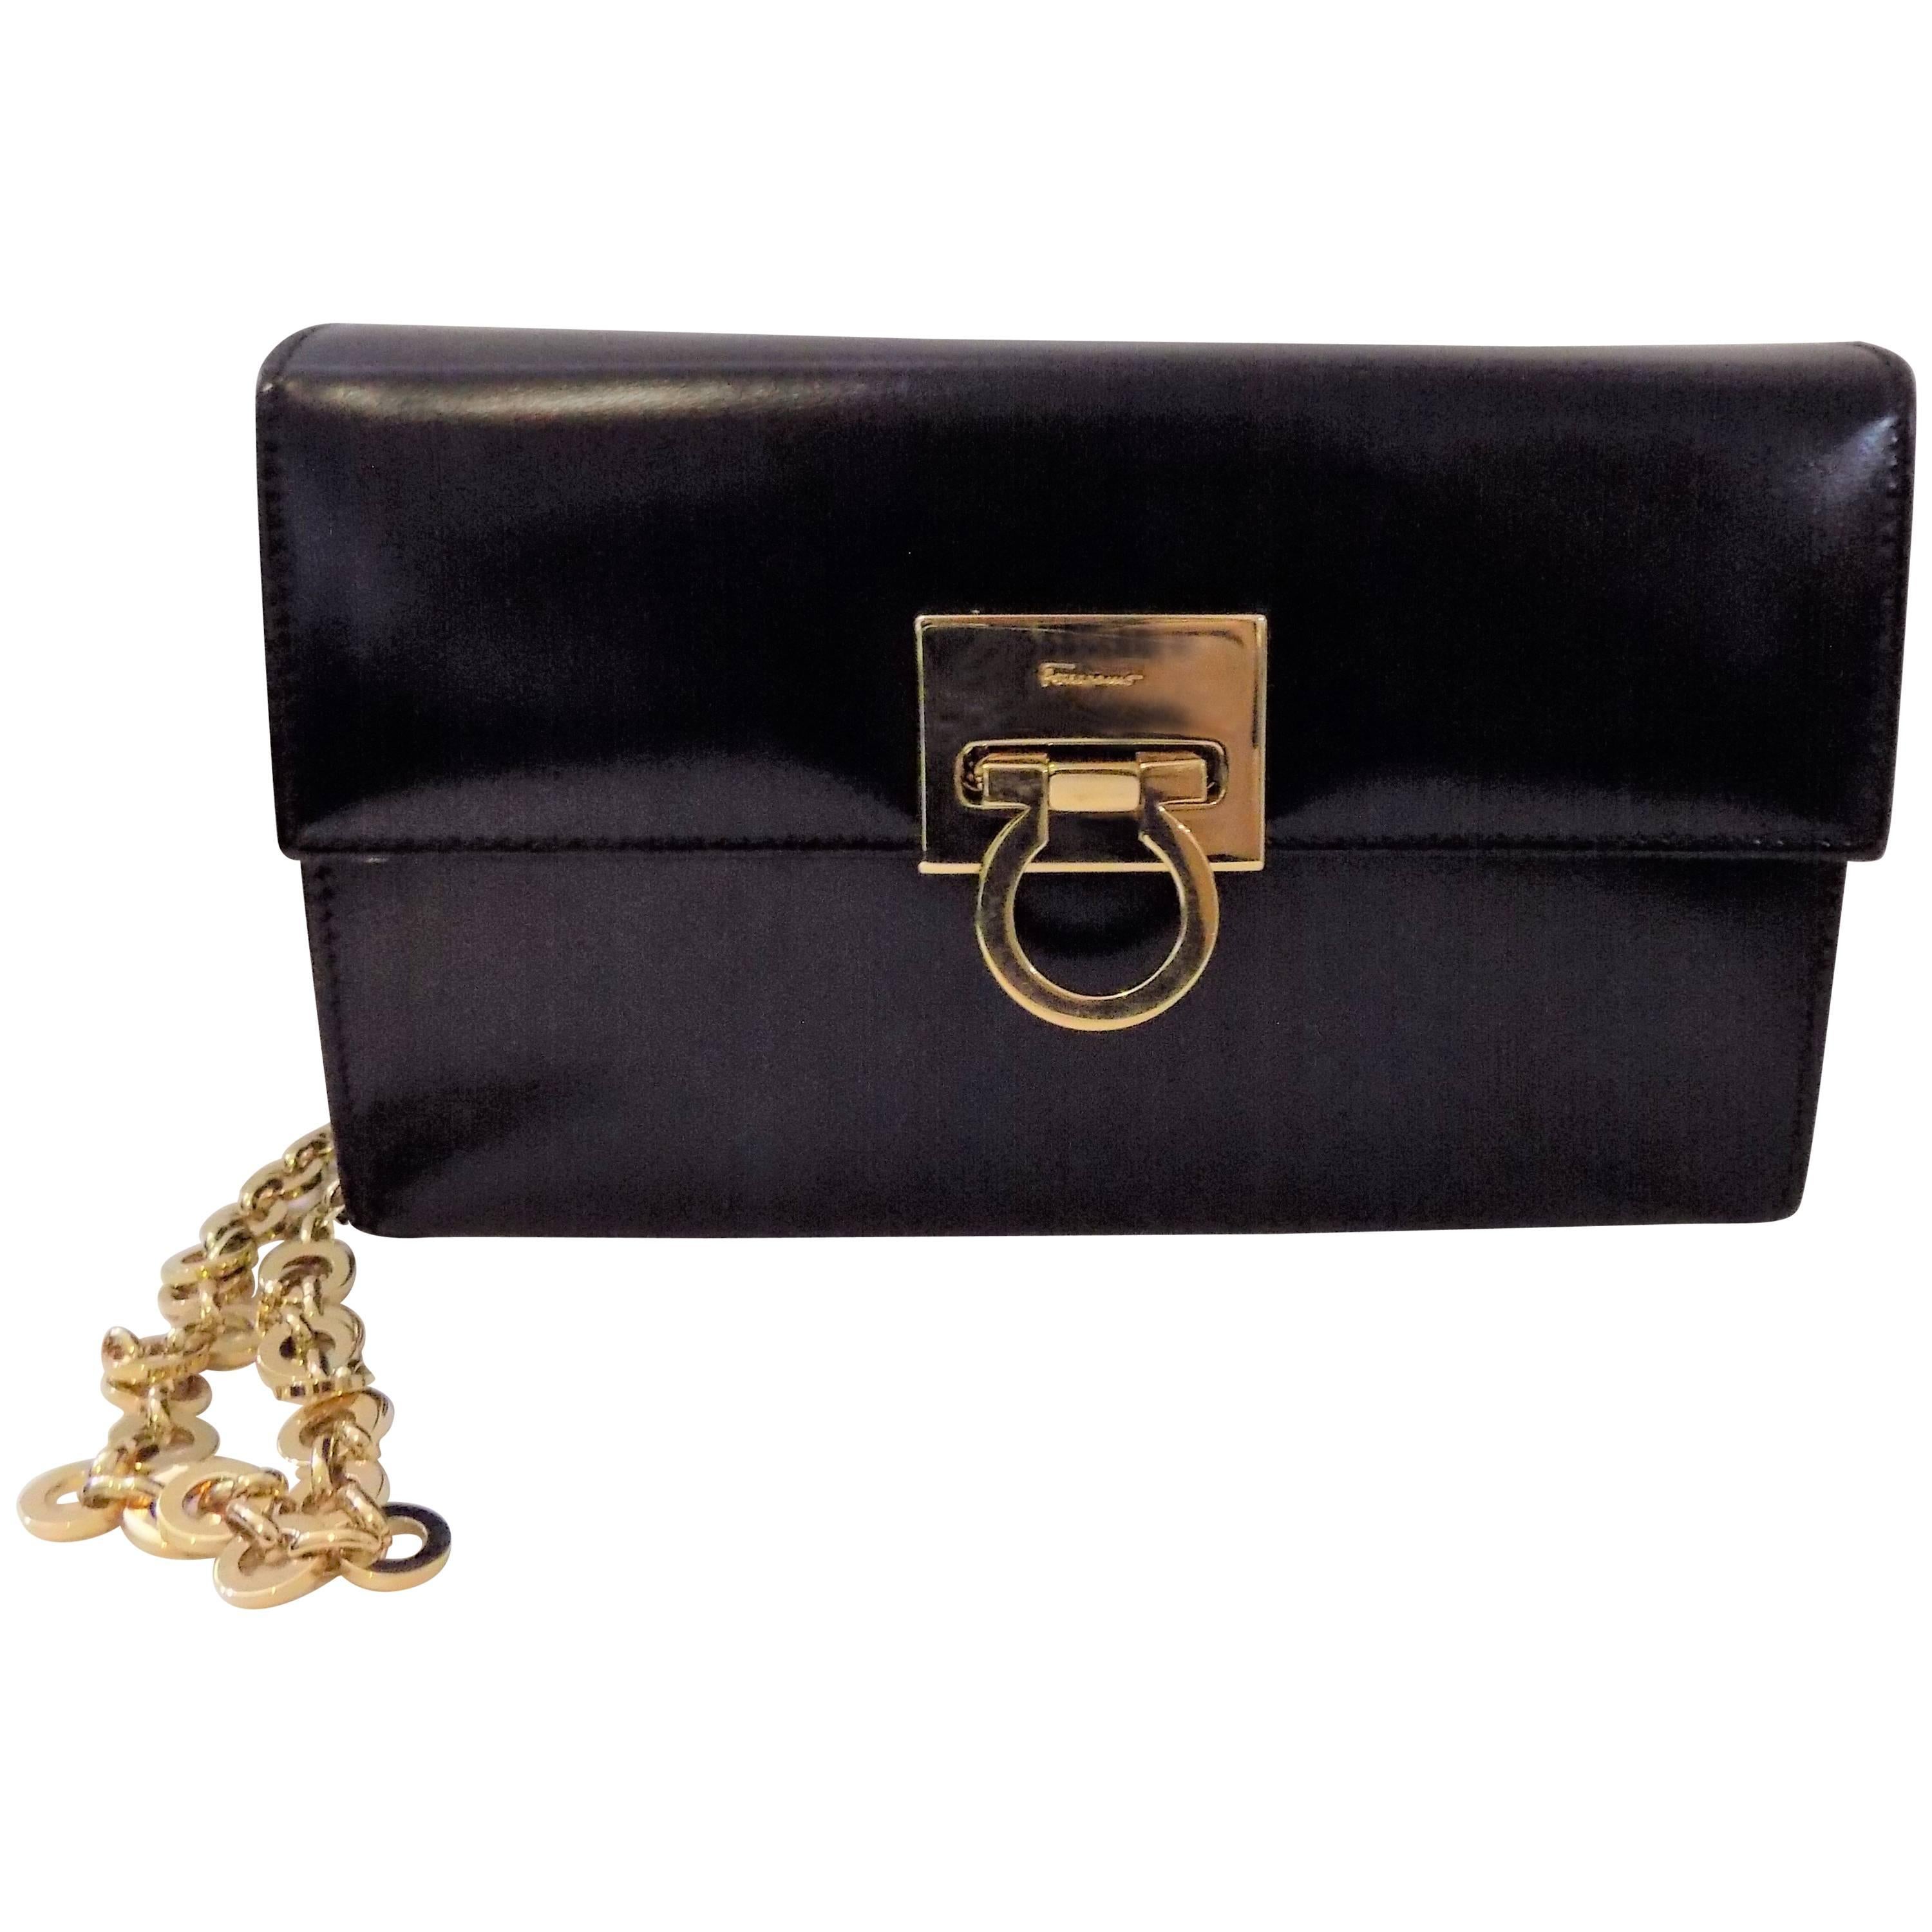  Salvatore Ferragamo black polished clutch / shoulder bag w gold chain